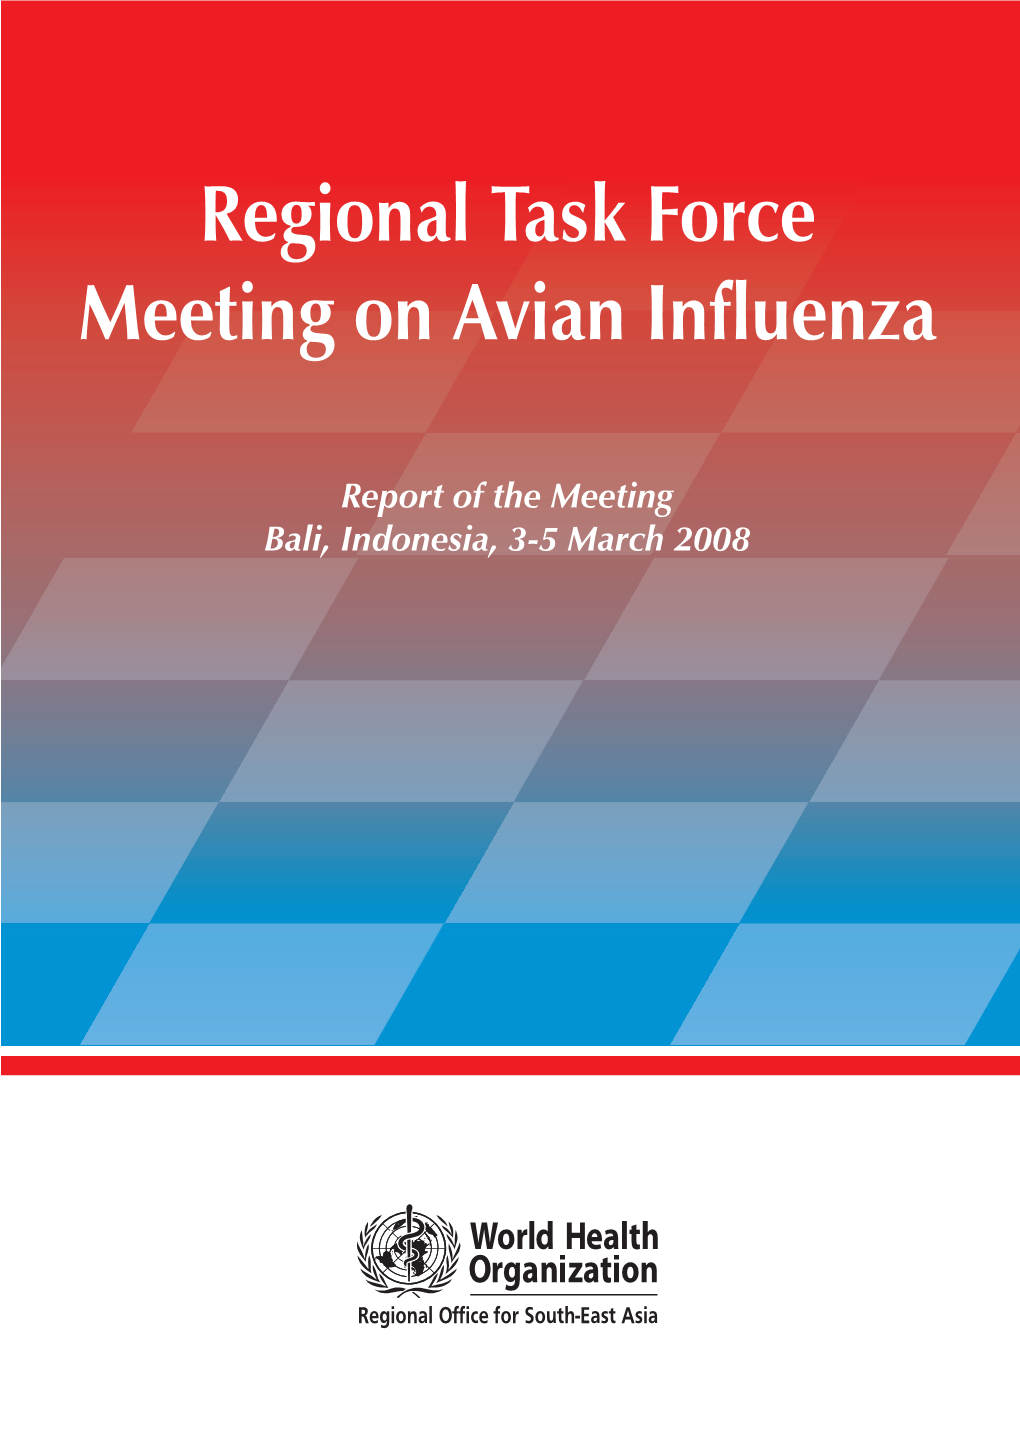 Regional Task Force Meeting on Avian Influenza